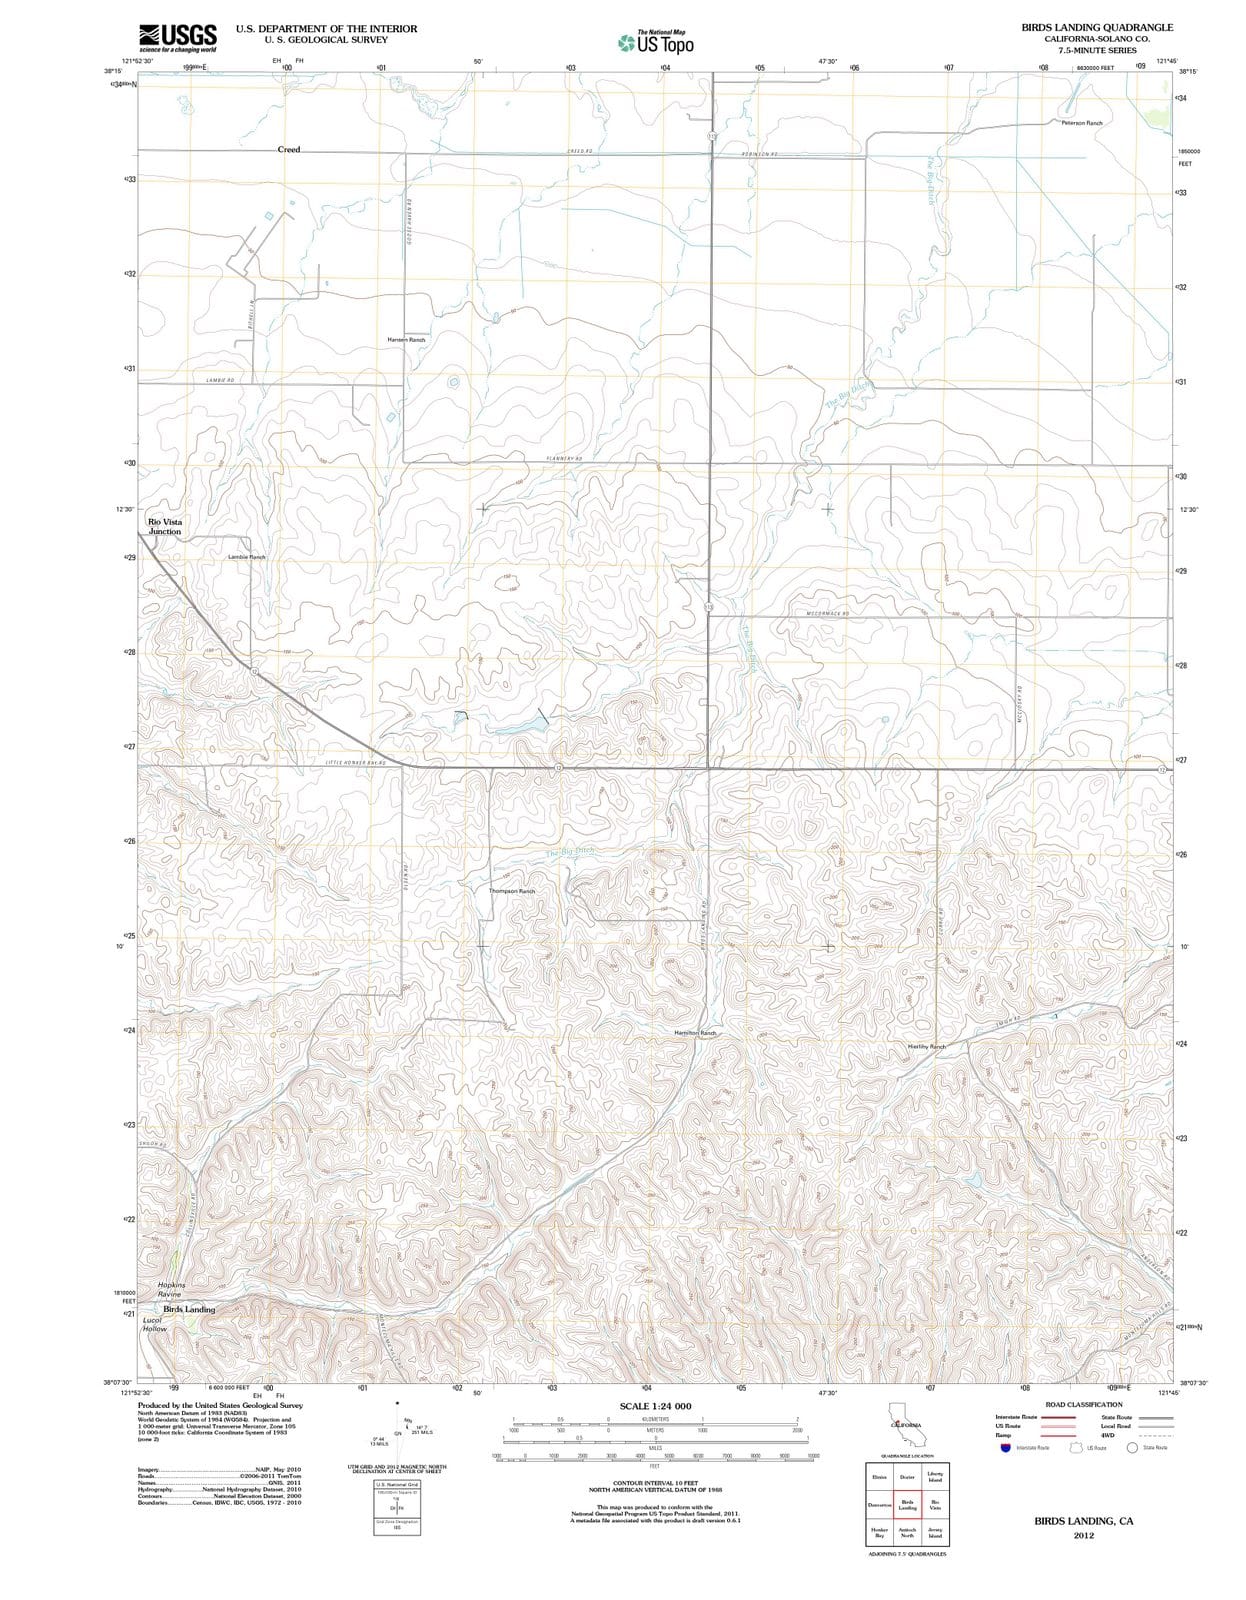 2012 Birds Landing, CA - California - USGS Topographic Map